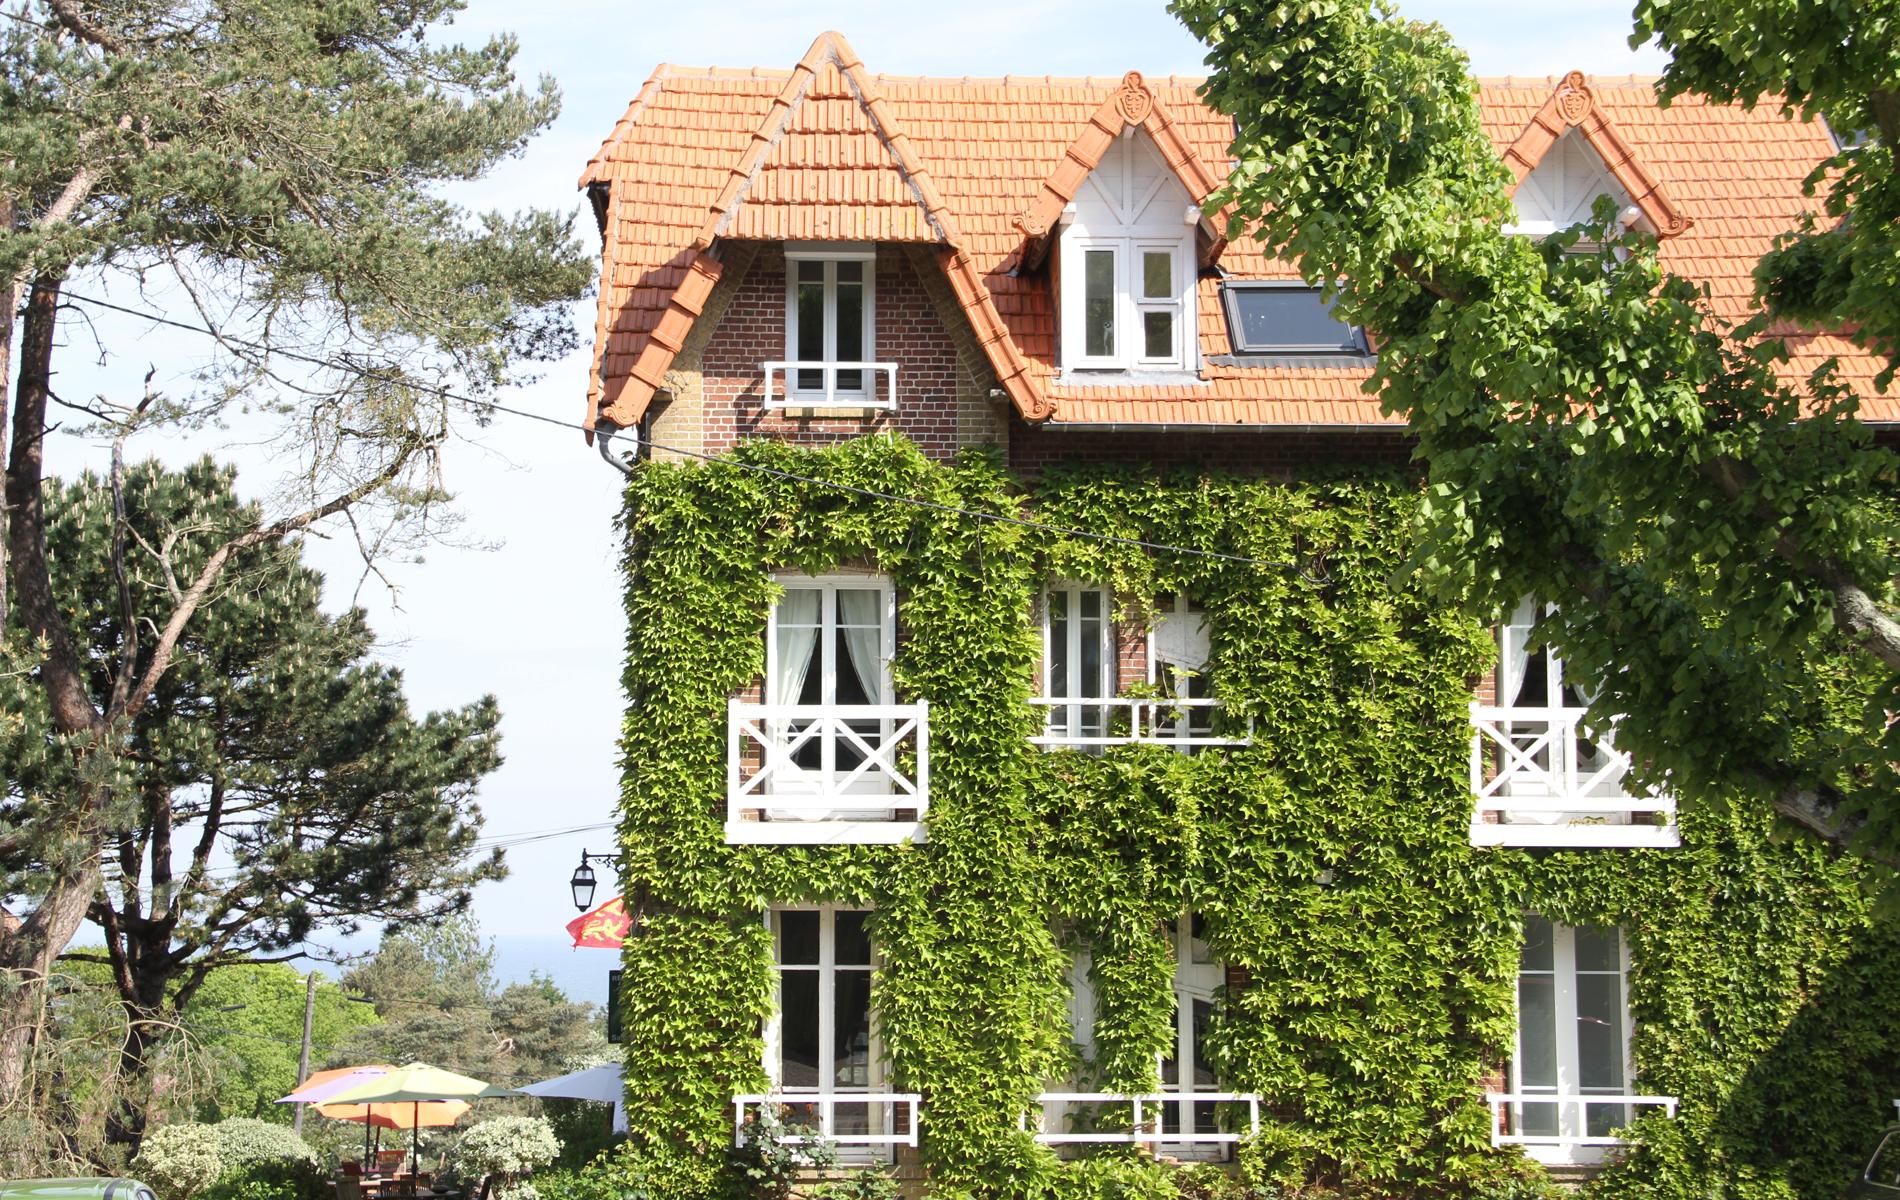 Hotel La Terrasse - Hotel de charme en Normandie